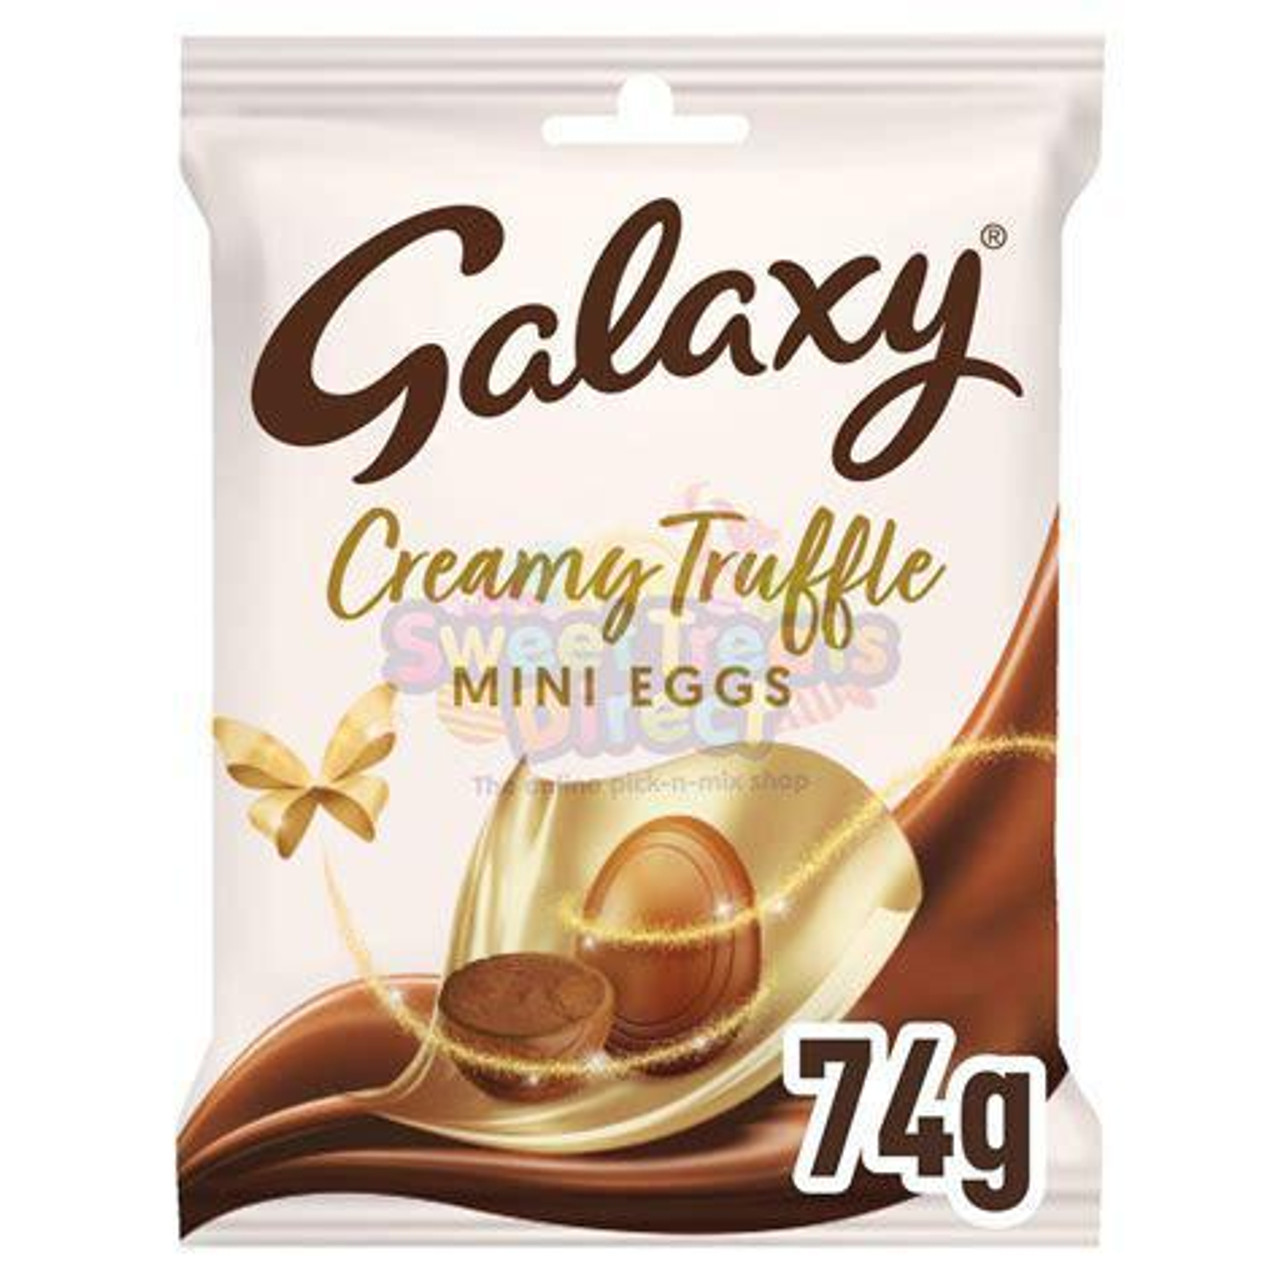 Mars - Galaxy Creamy Truffle Mini Eggs, 74g